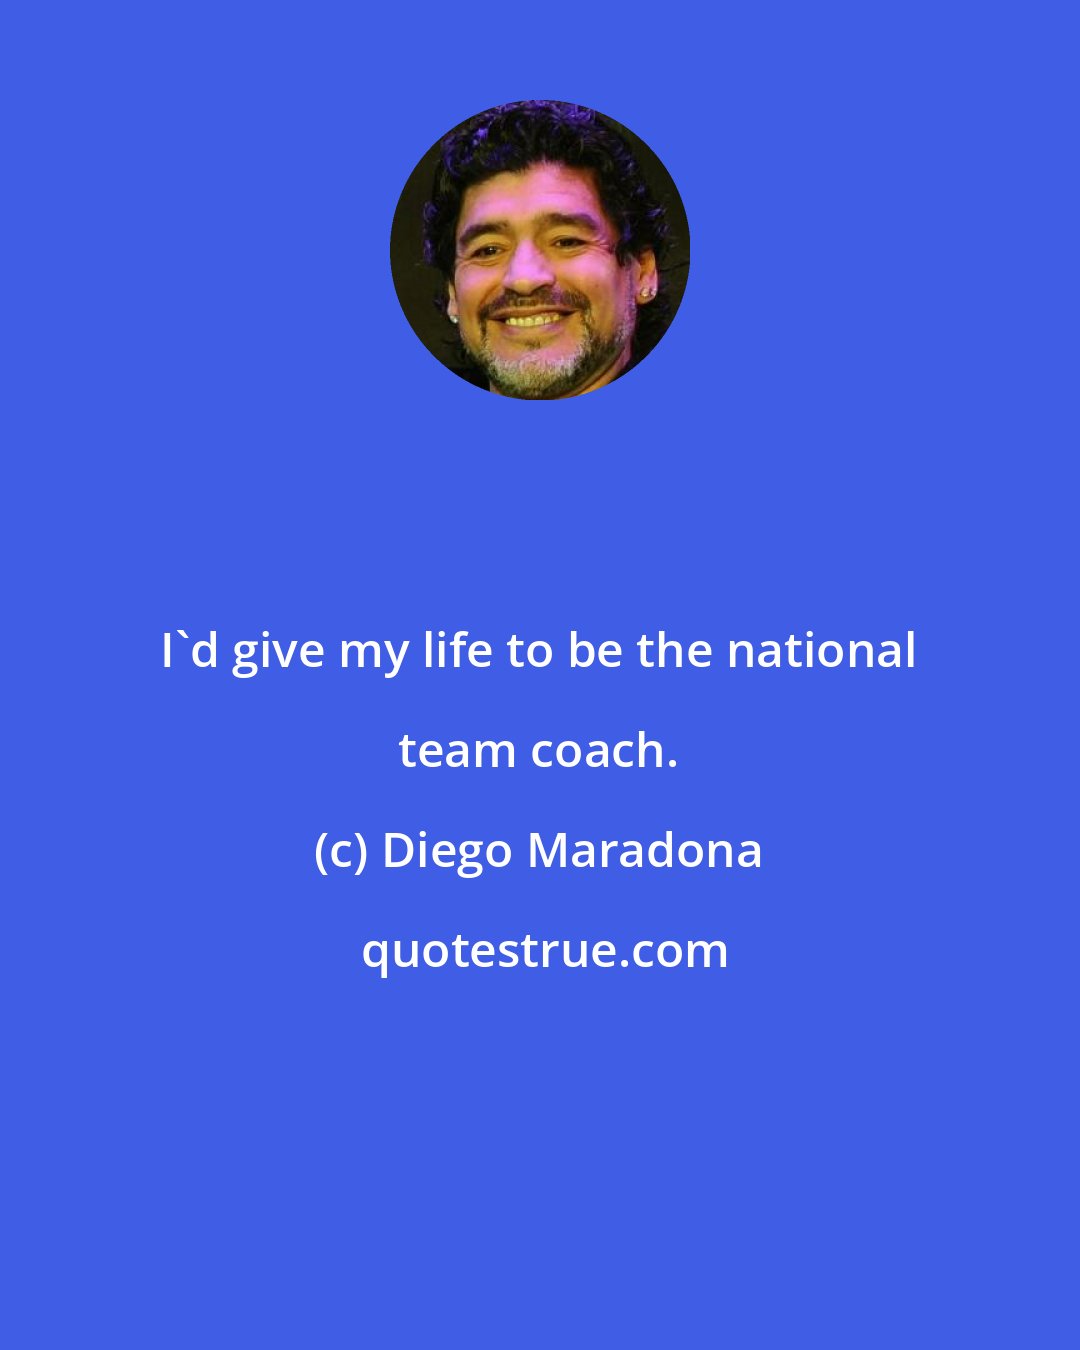 Diego Maradona: I'd give my life to be the national team coach.